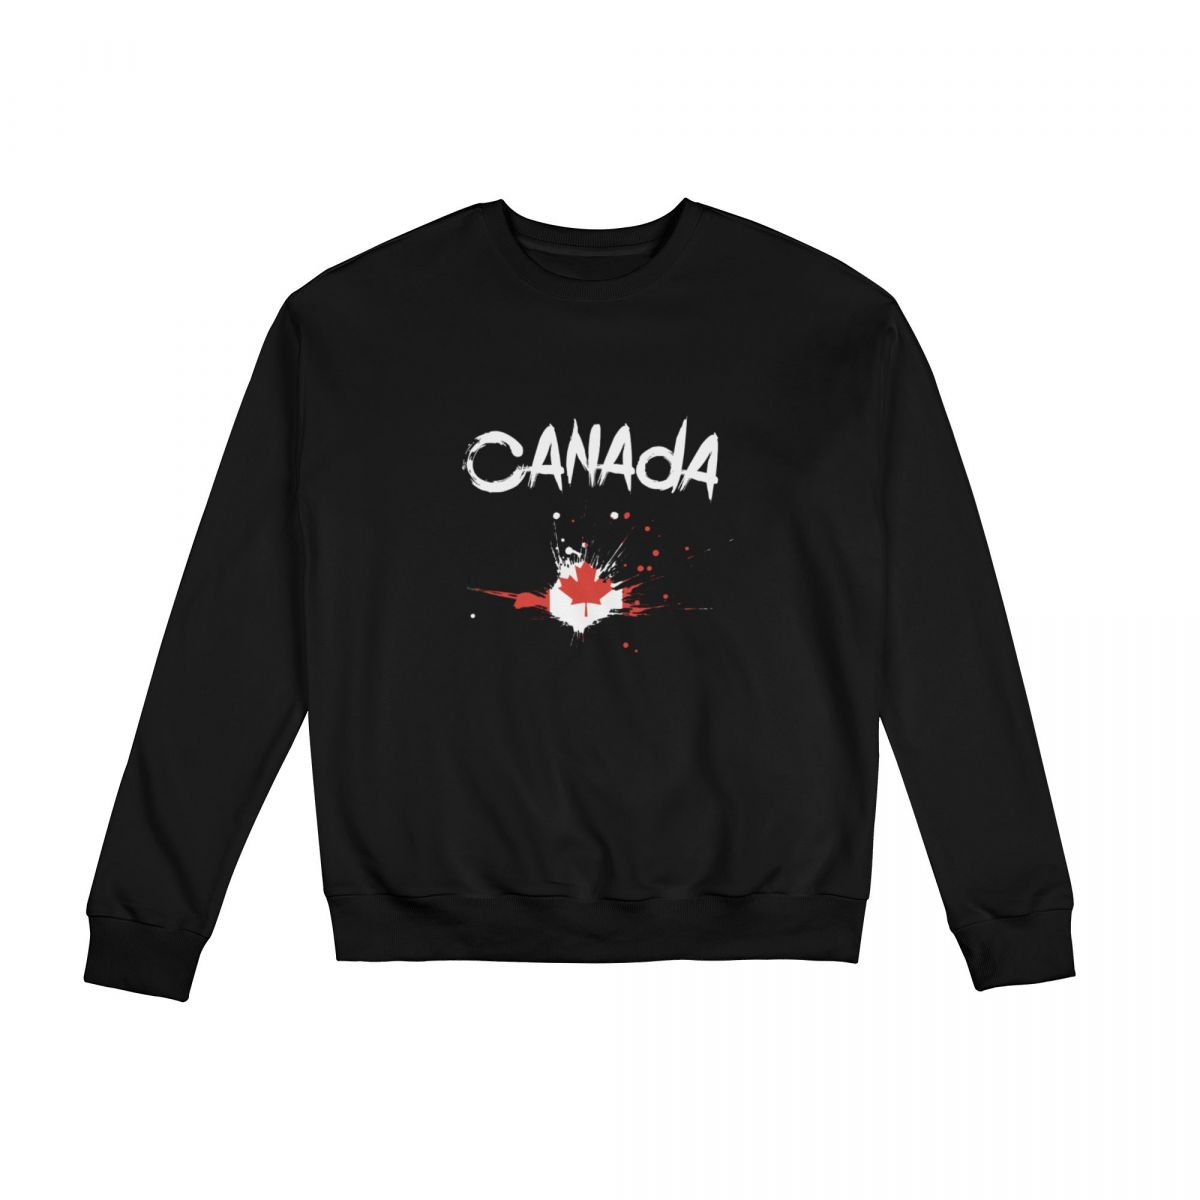 Canada Ink Spatter Long Sleeve Sweatshirt